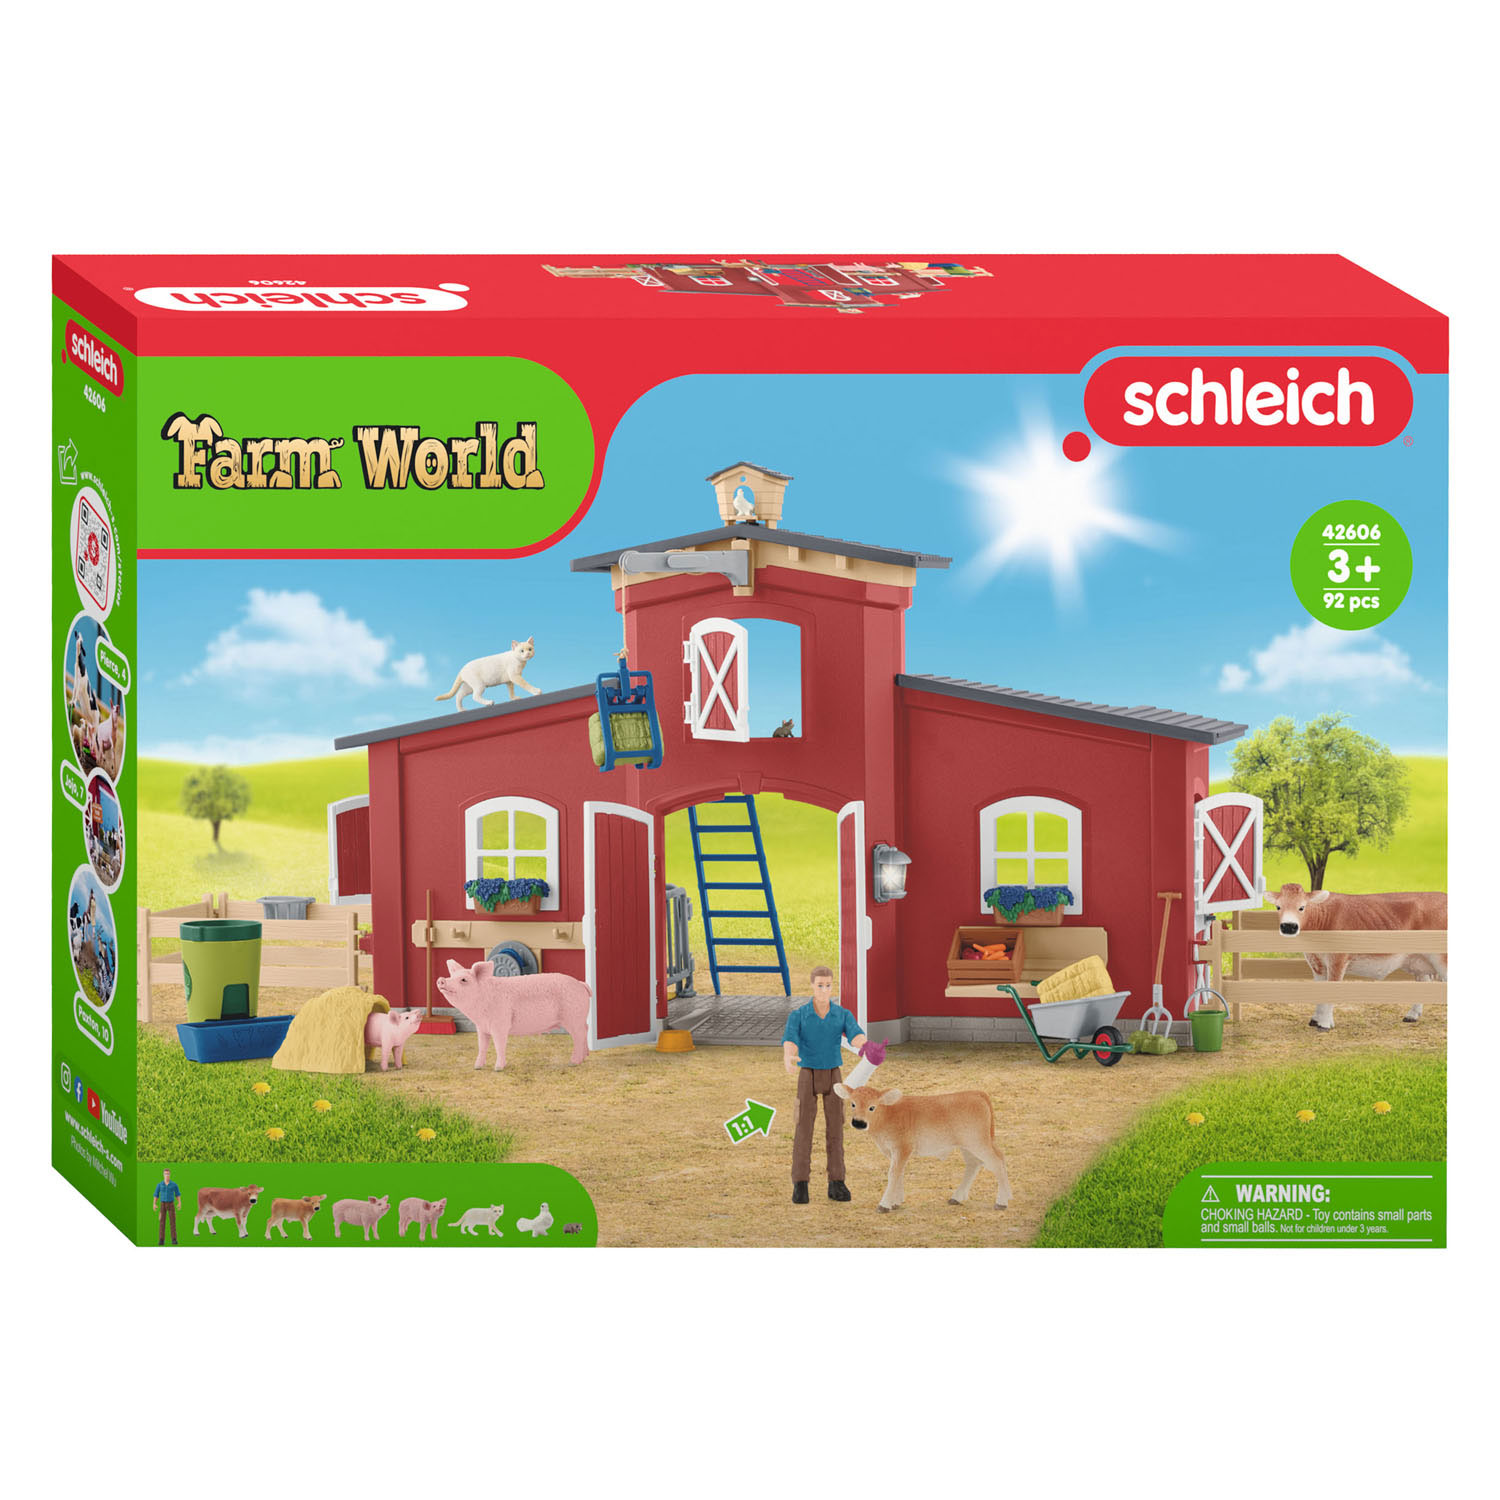 Schleich FARM WORLD Grande écurie Rouge 42606